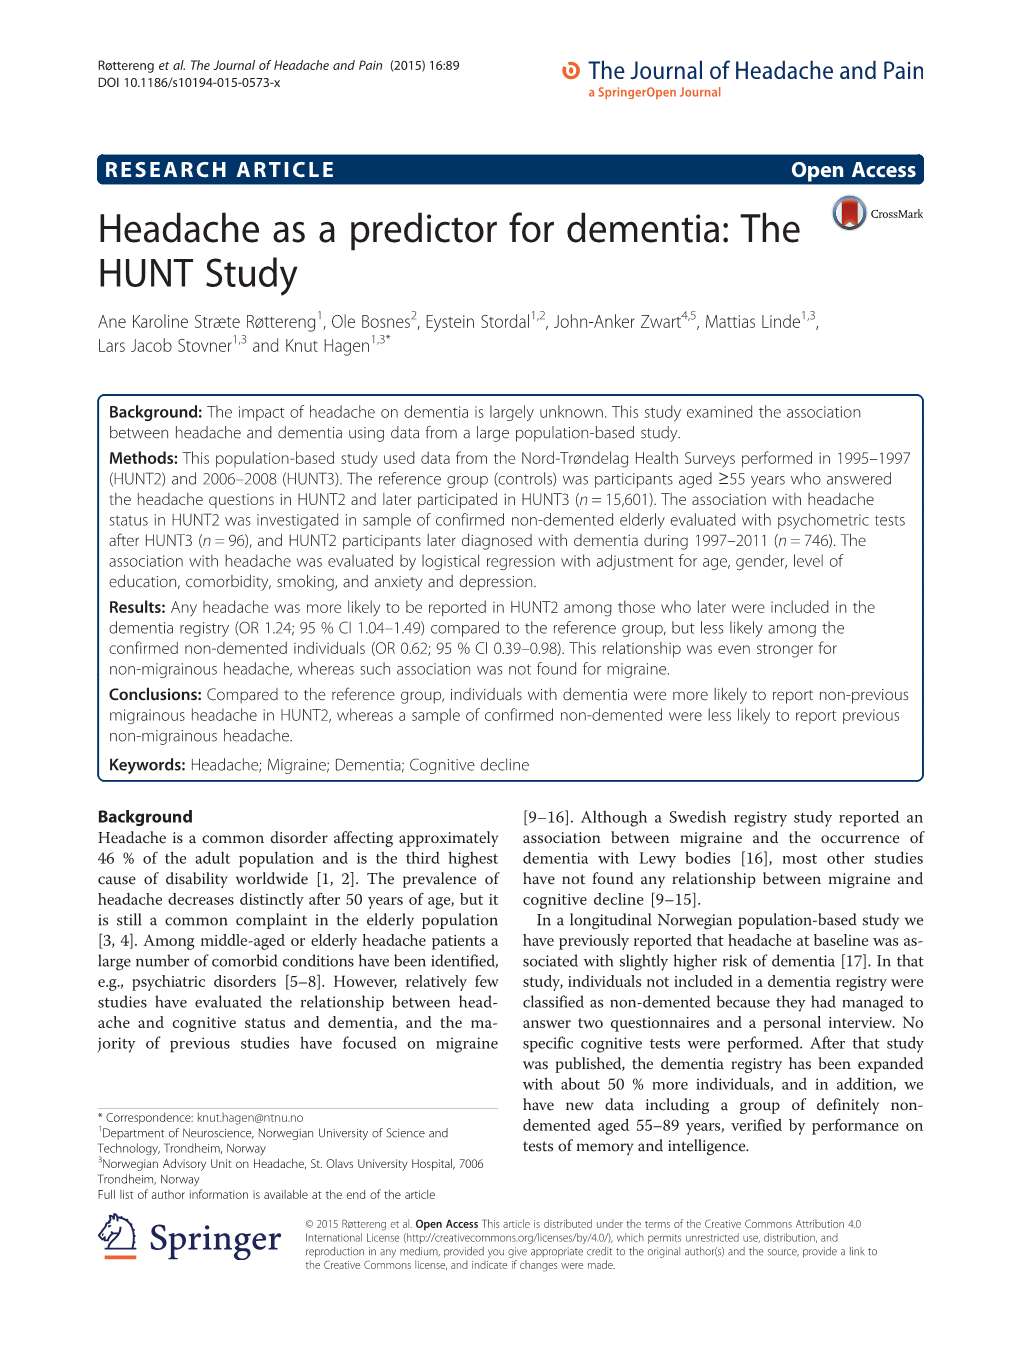 Headache As a Predictor for Dementia: the HUNT Study